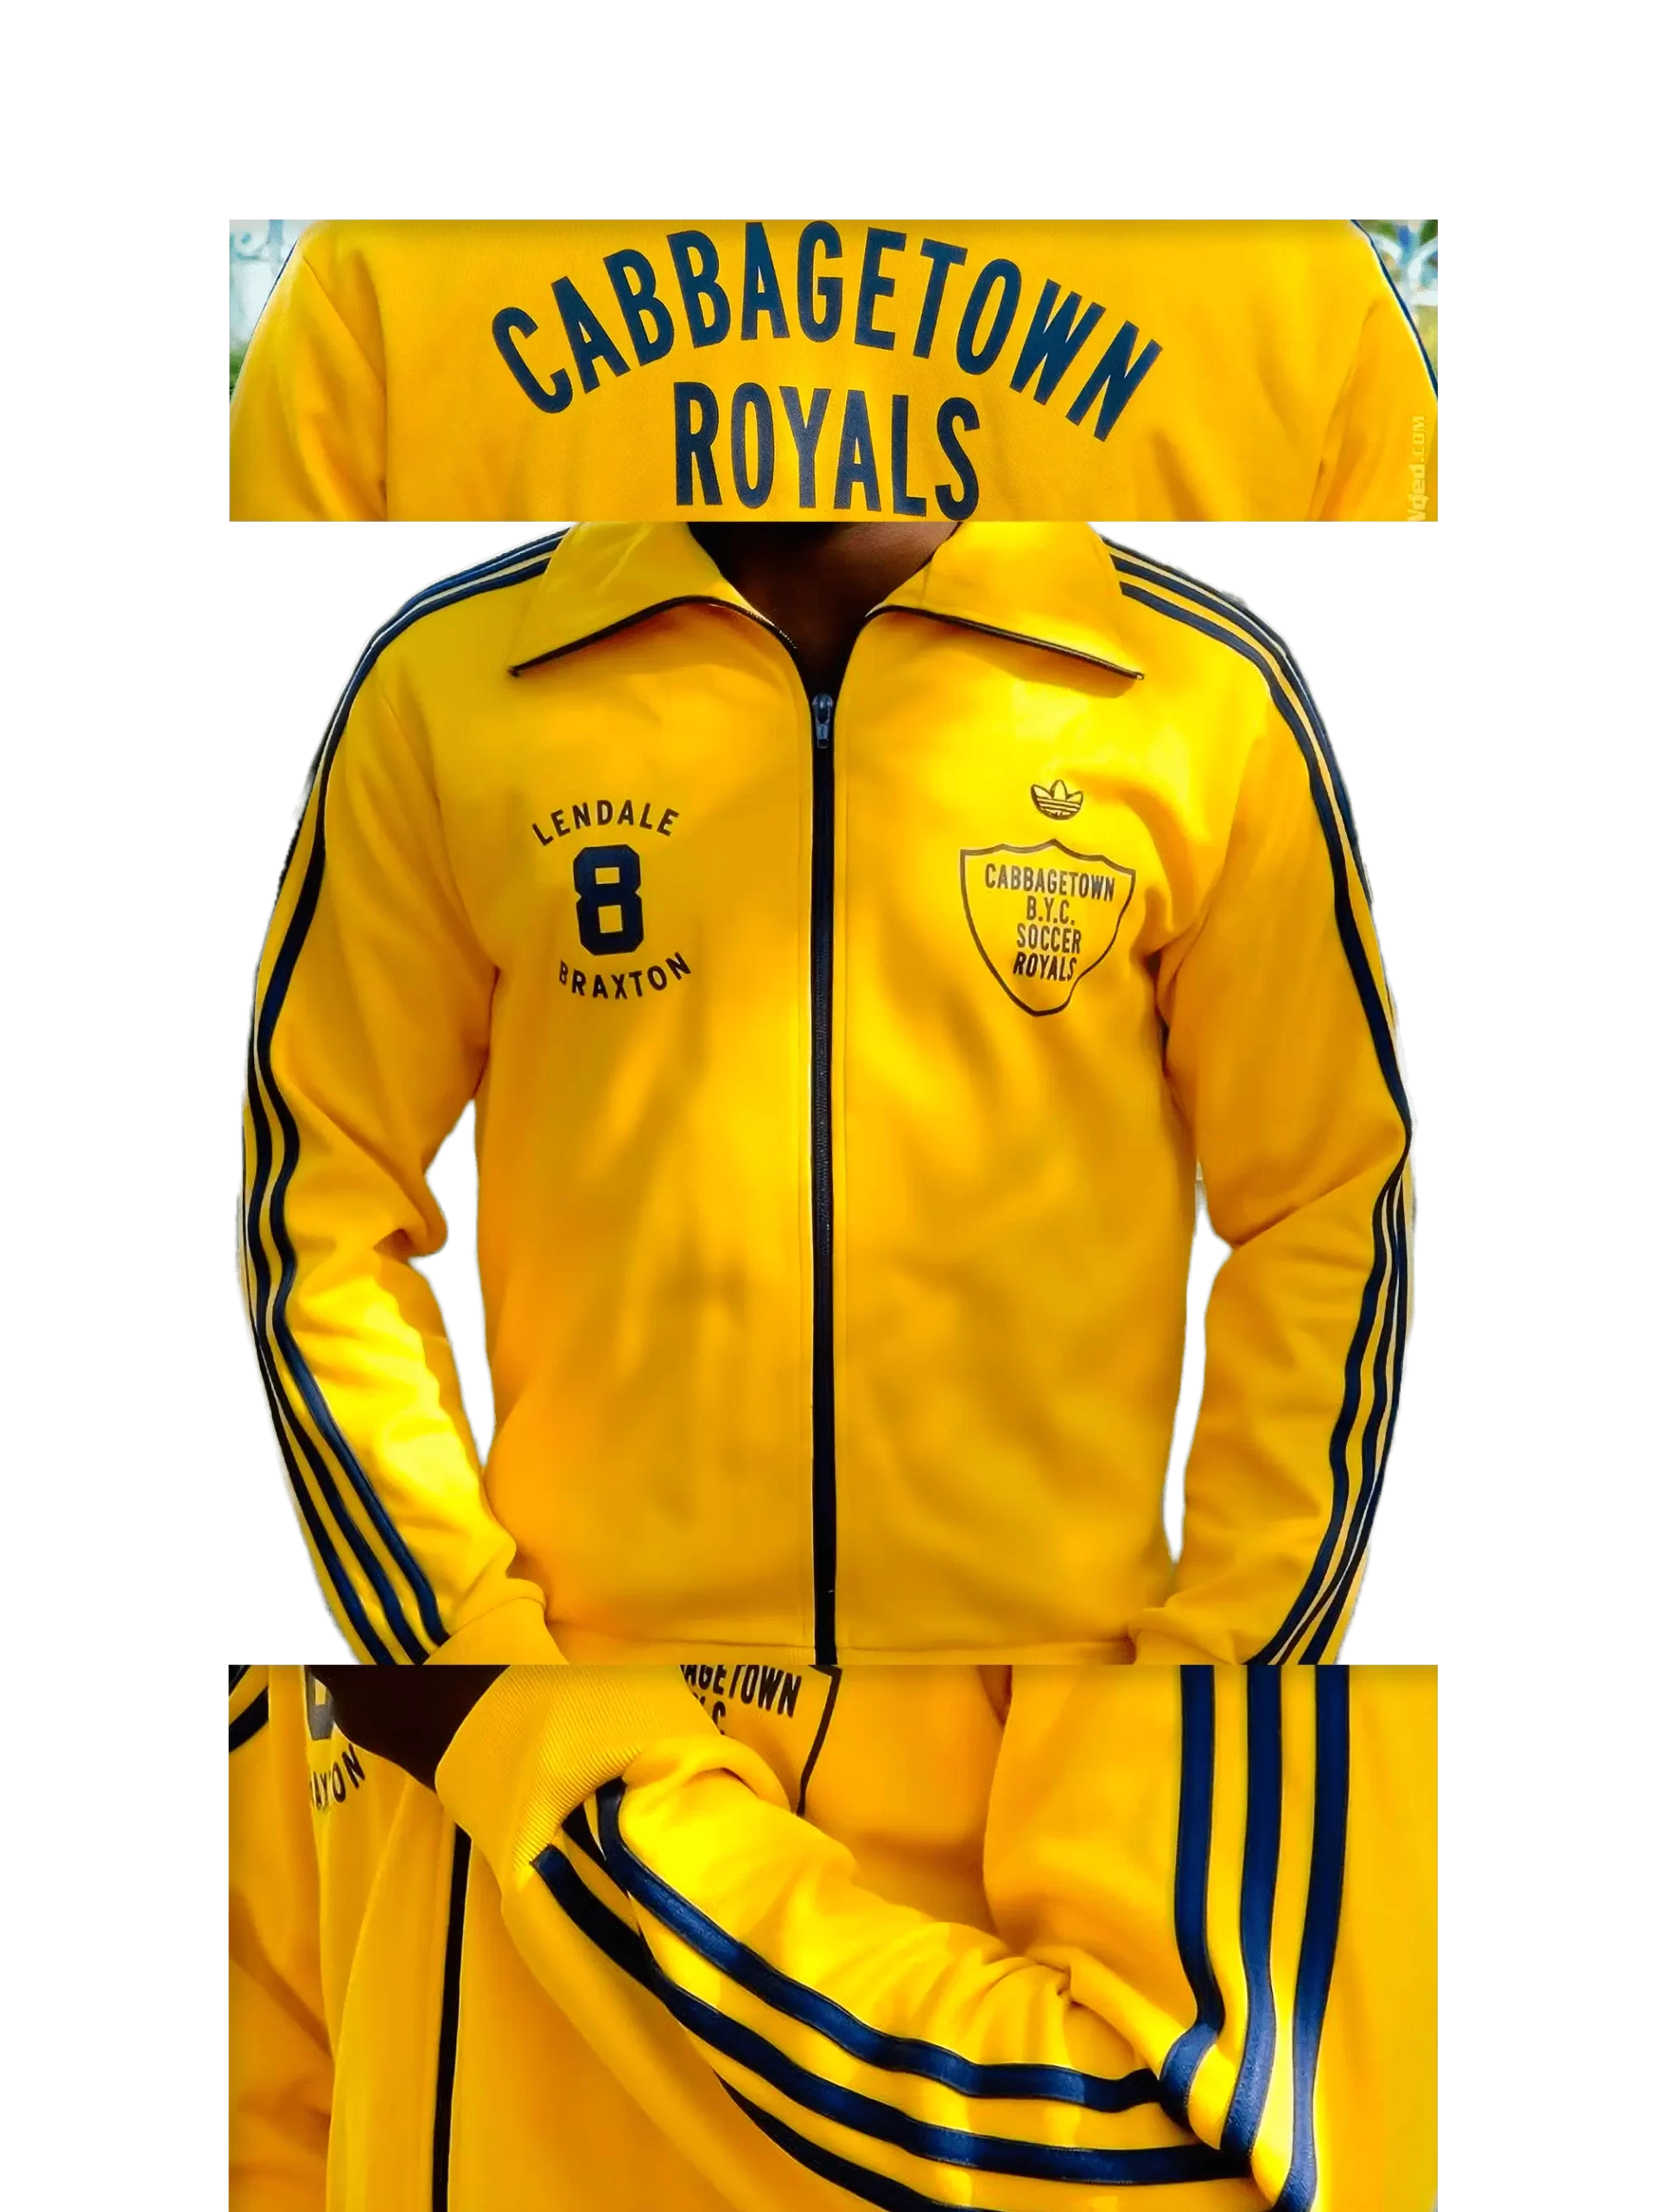 Men's 2004 Cabbagetown Royals TT by Adidas Originals: Exclusive (EnLawded.com file #lmchk69382ip2y123823kg9st)